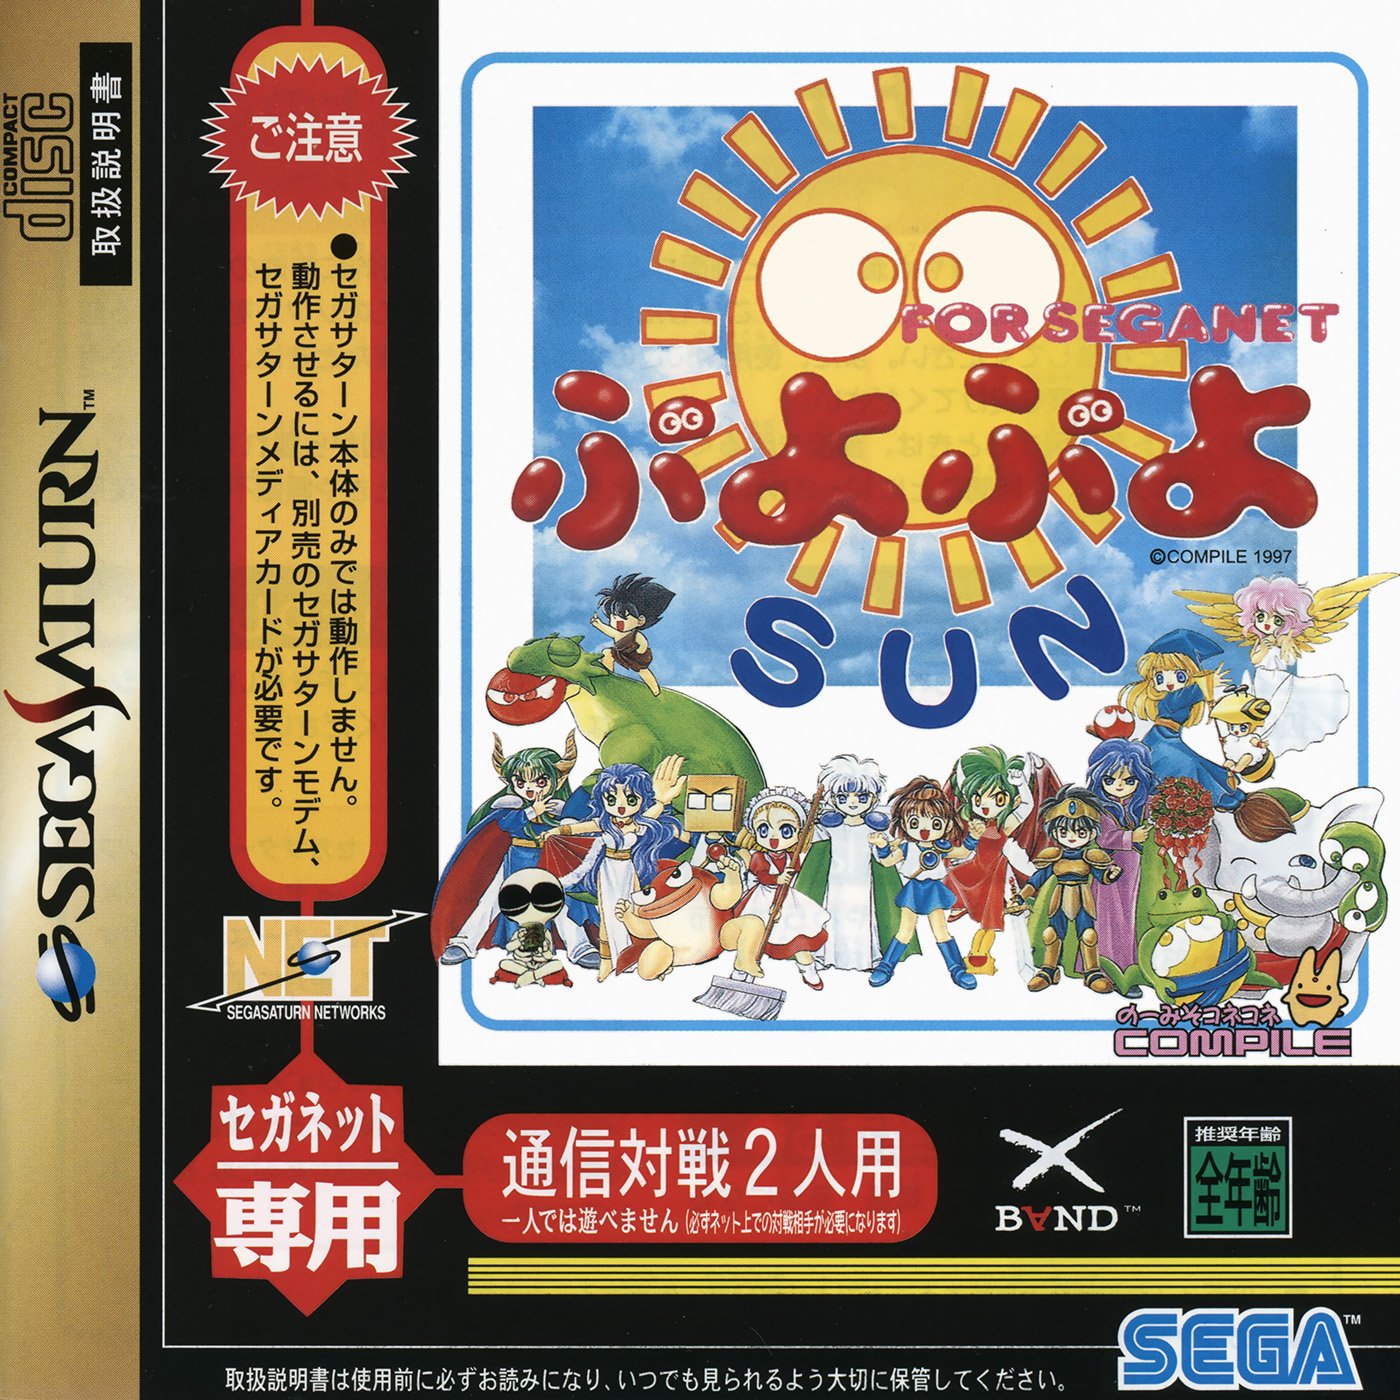 Puyo Puyo Sun for Seganet